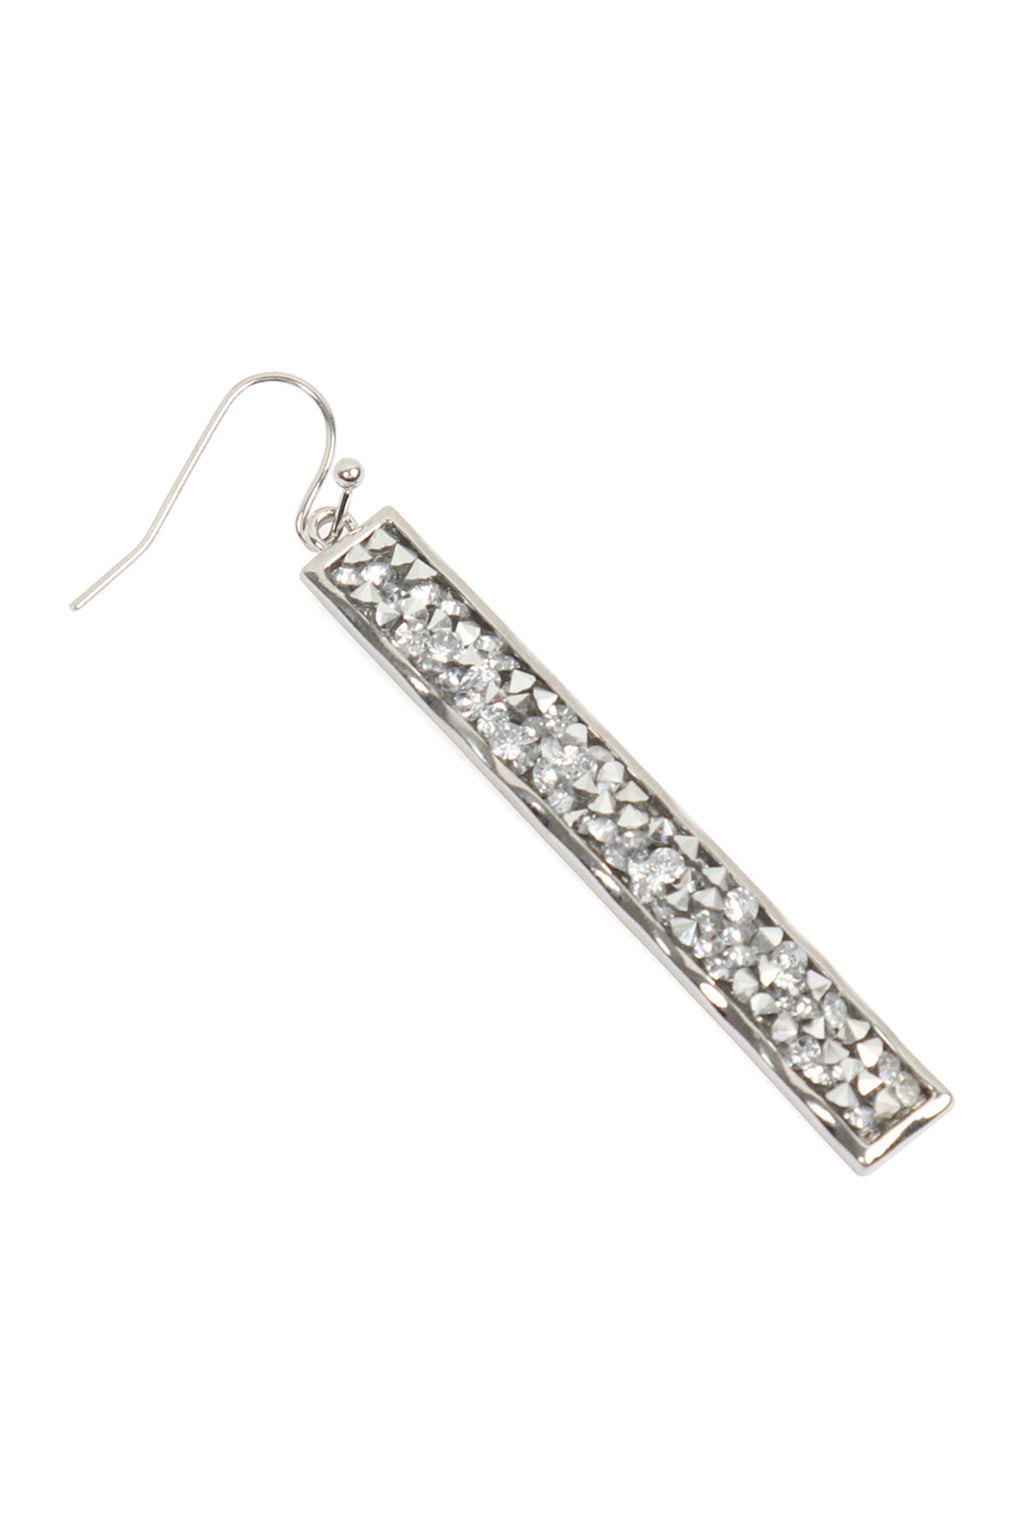 Silver Bar Glitter Faceted Dangle Hook Earrings - Pack of 6